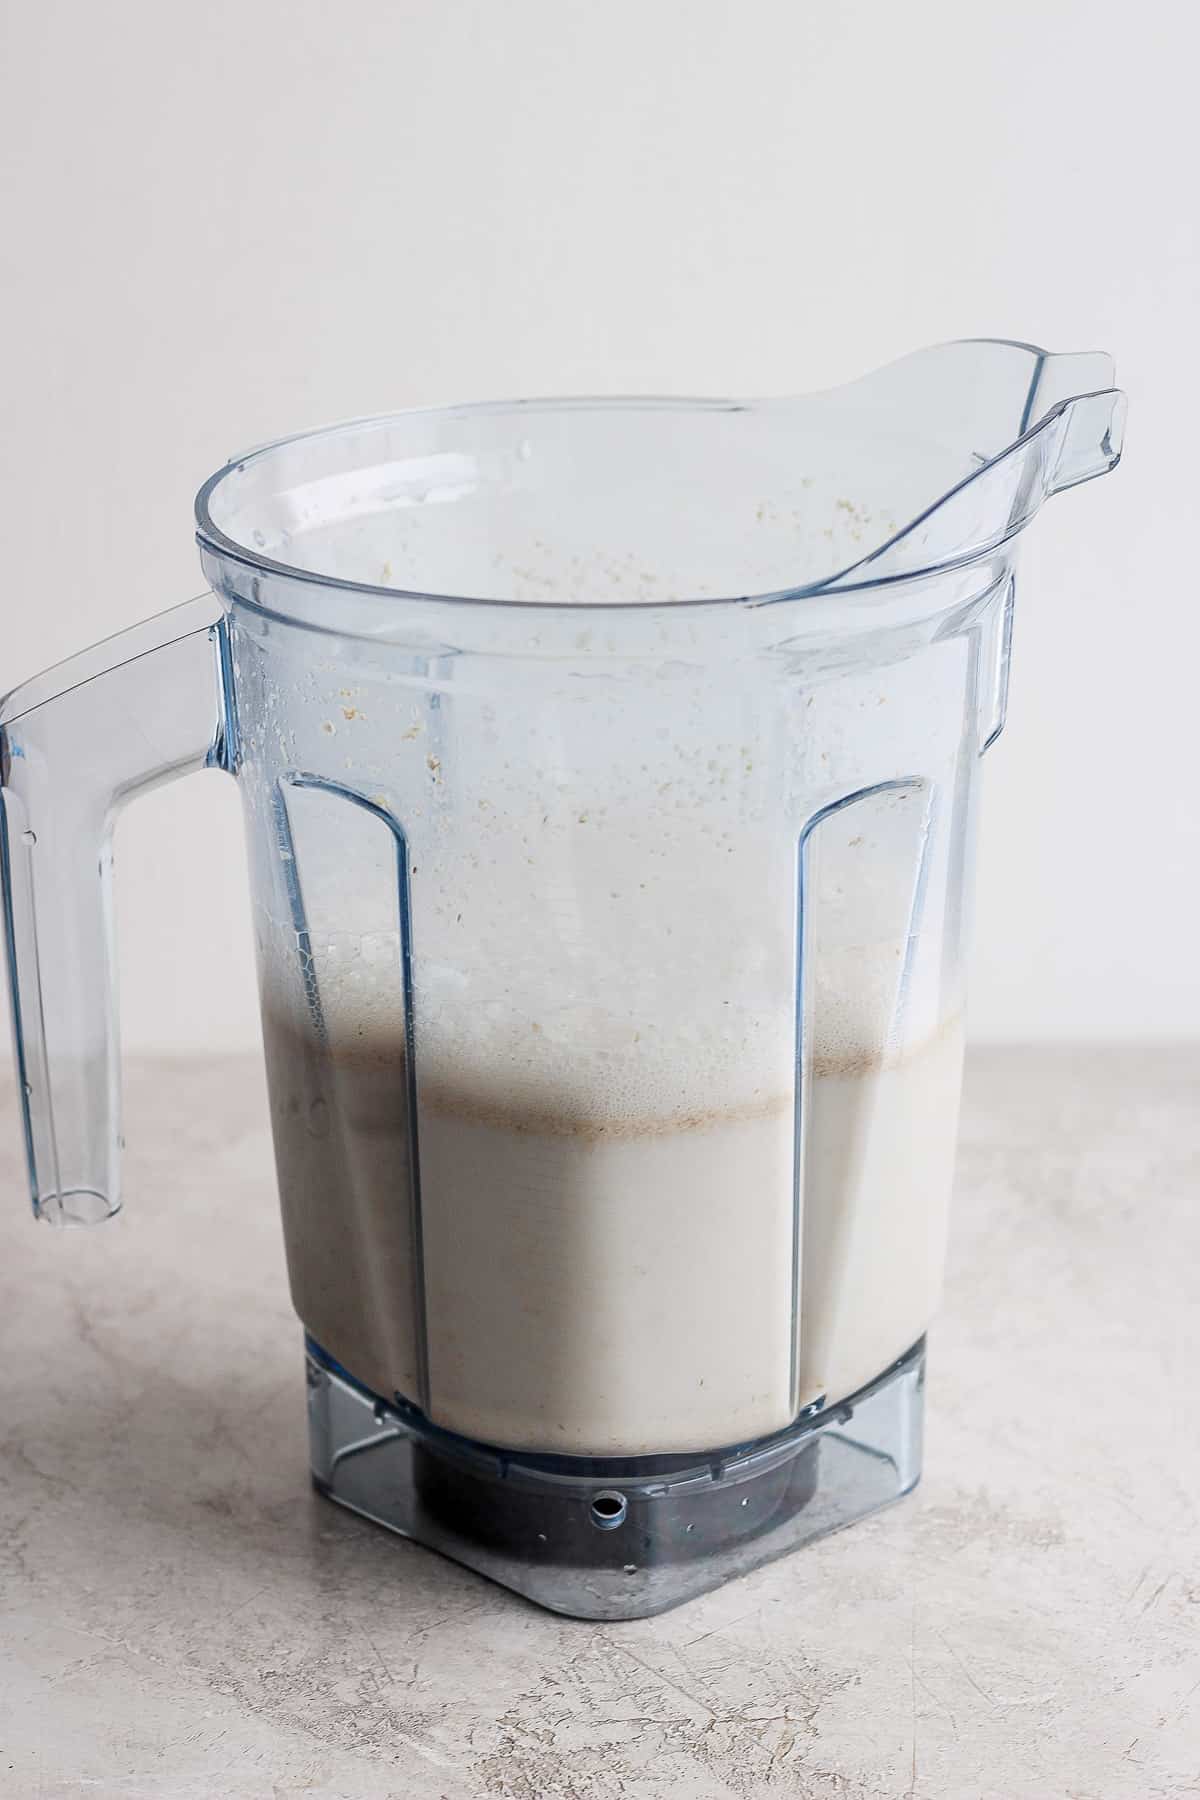 oat milk in a blender after blending oats and water